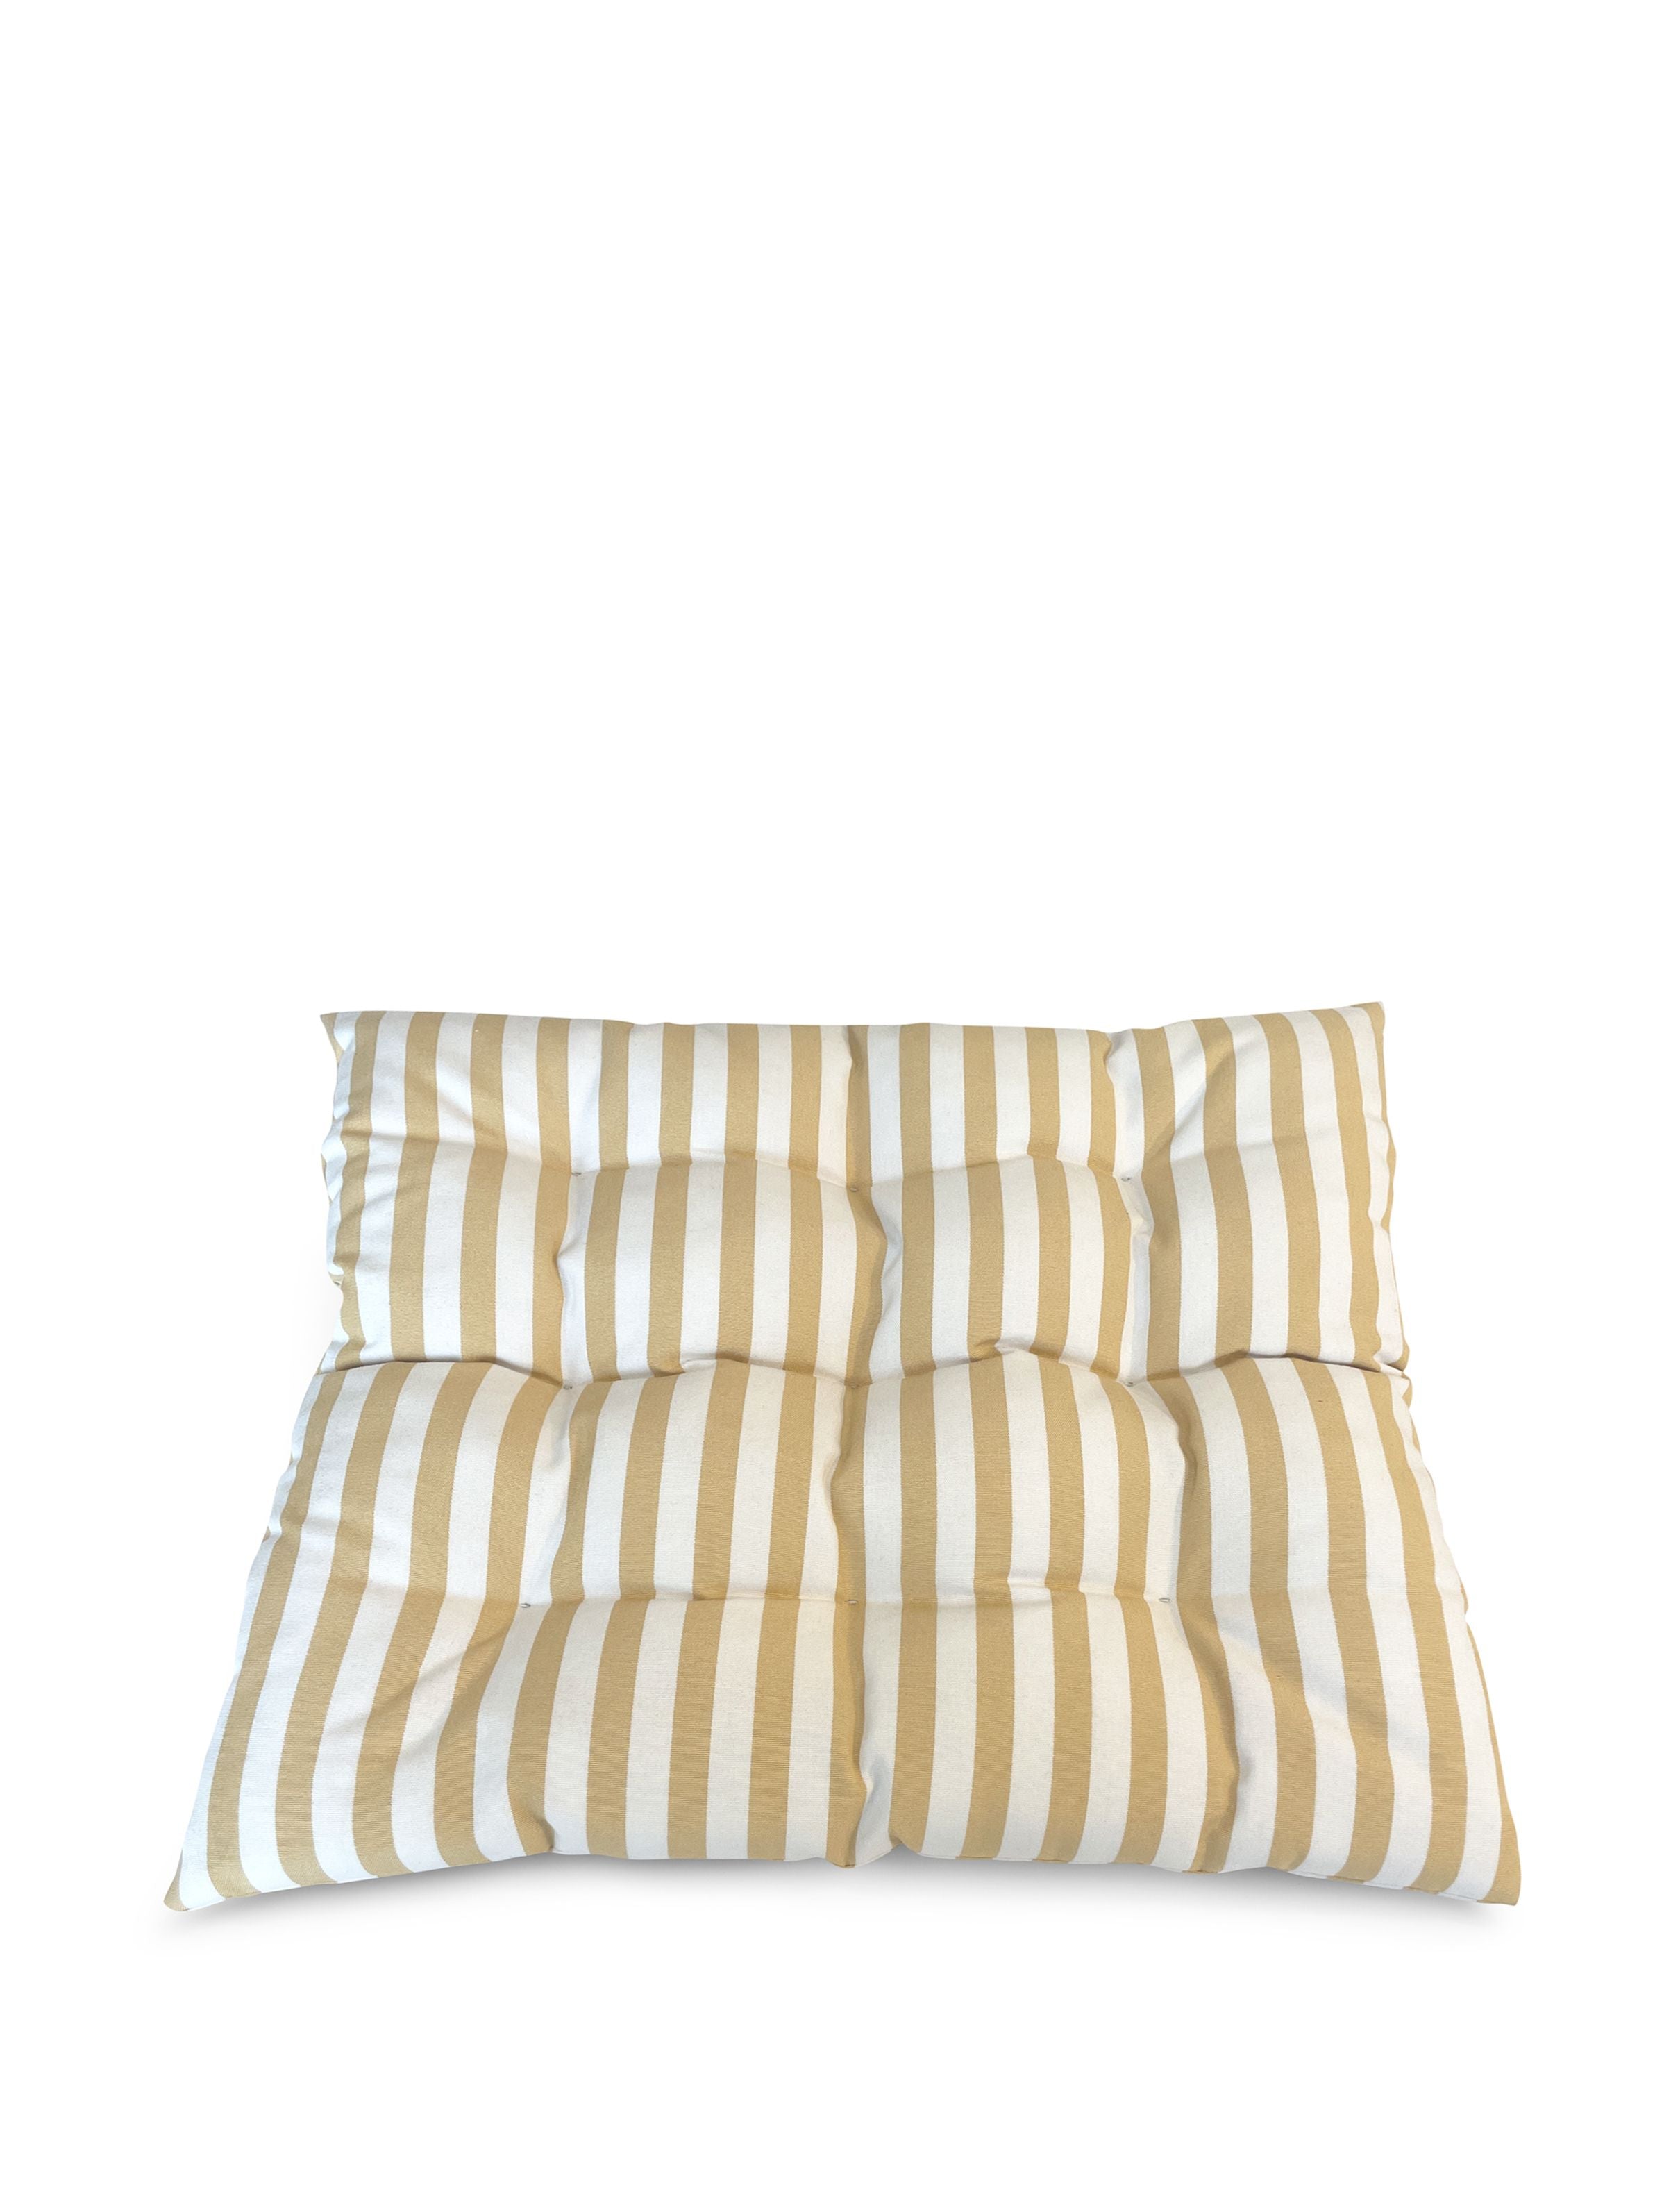 Skagerak Barriere Cushion 43x43 cm, gouden gele streep